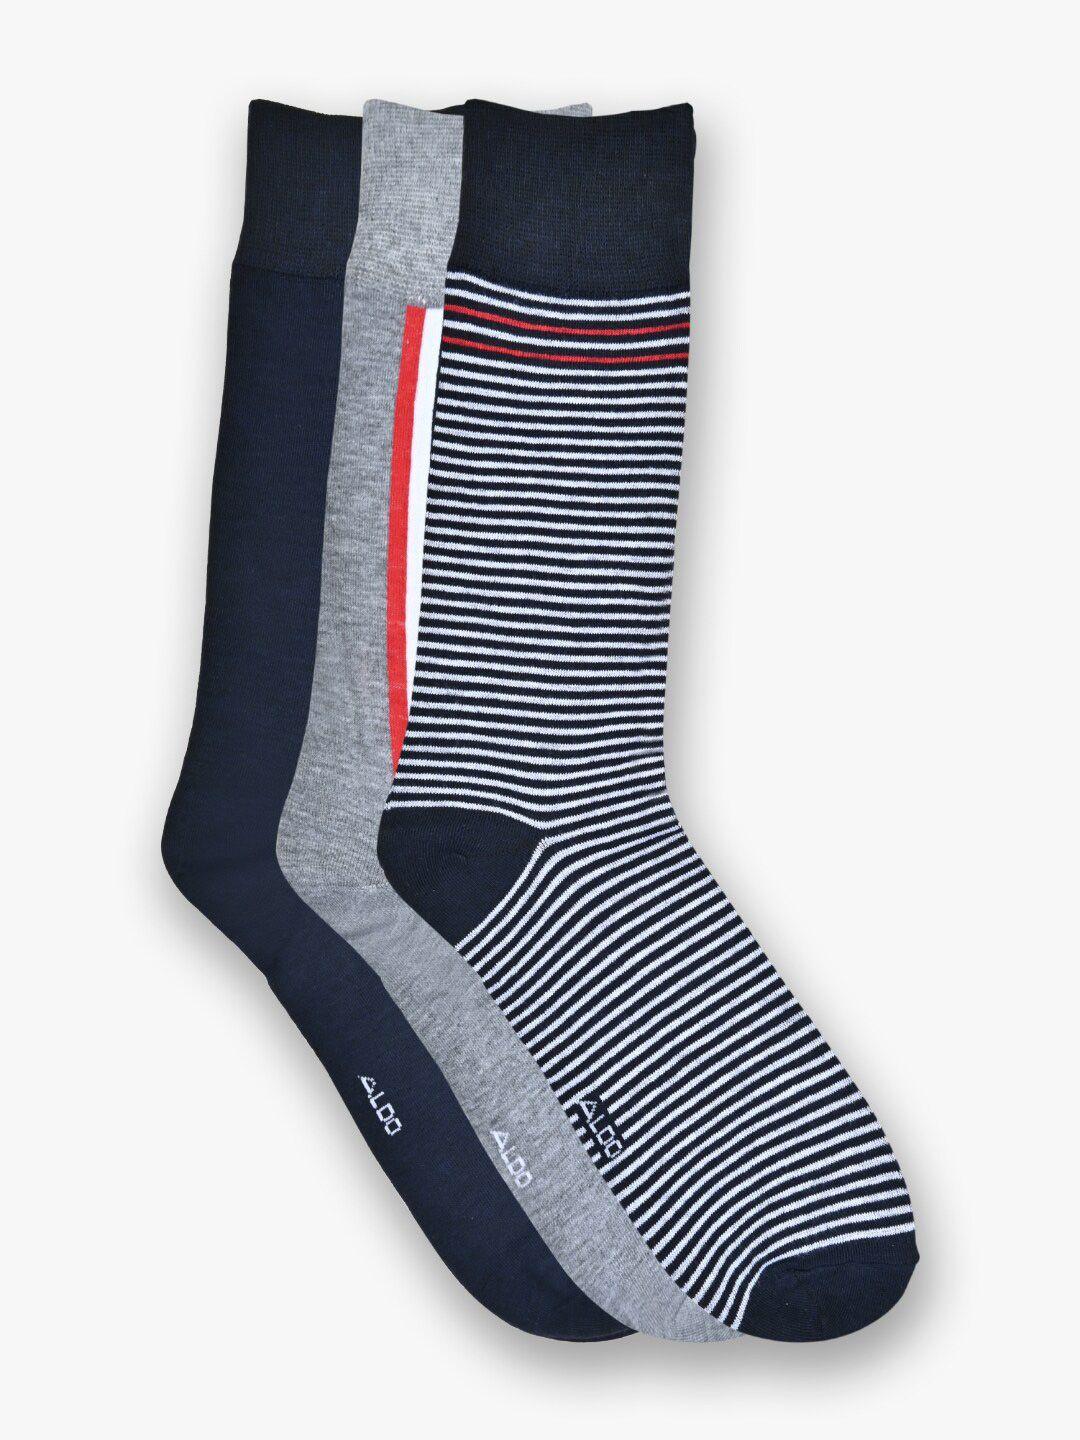 aldo-men-pack-of-3-striped-cotton-calf-length-socks